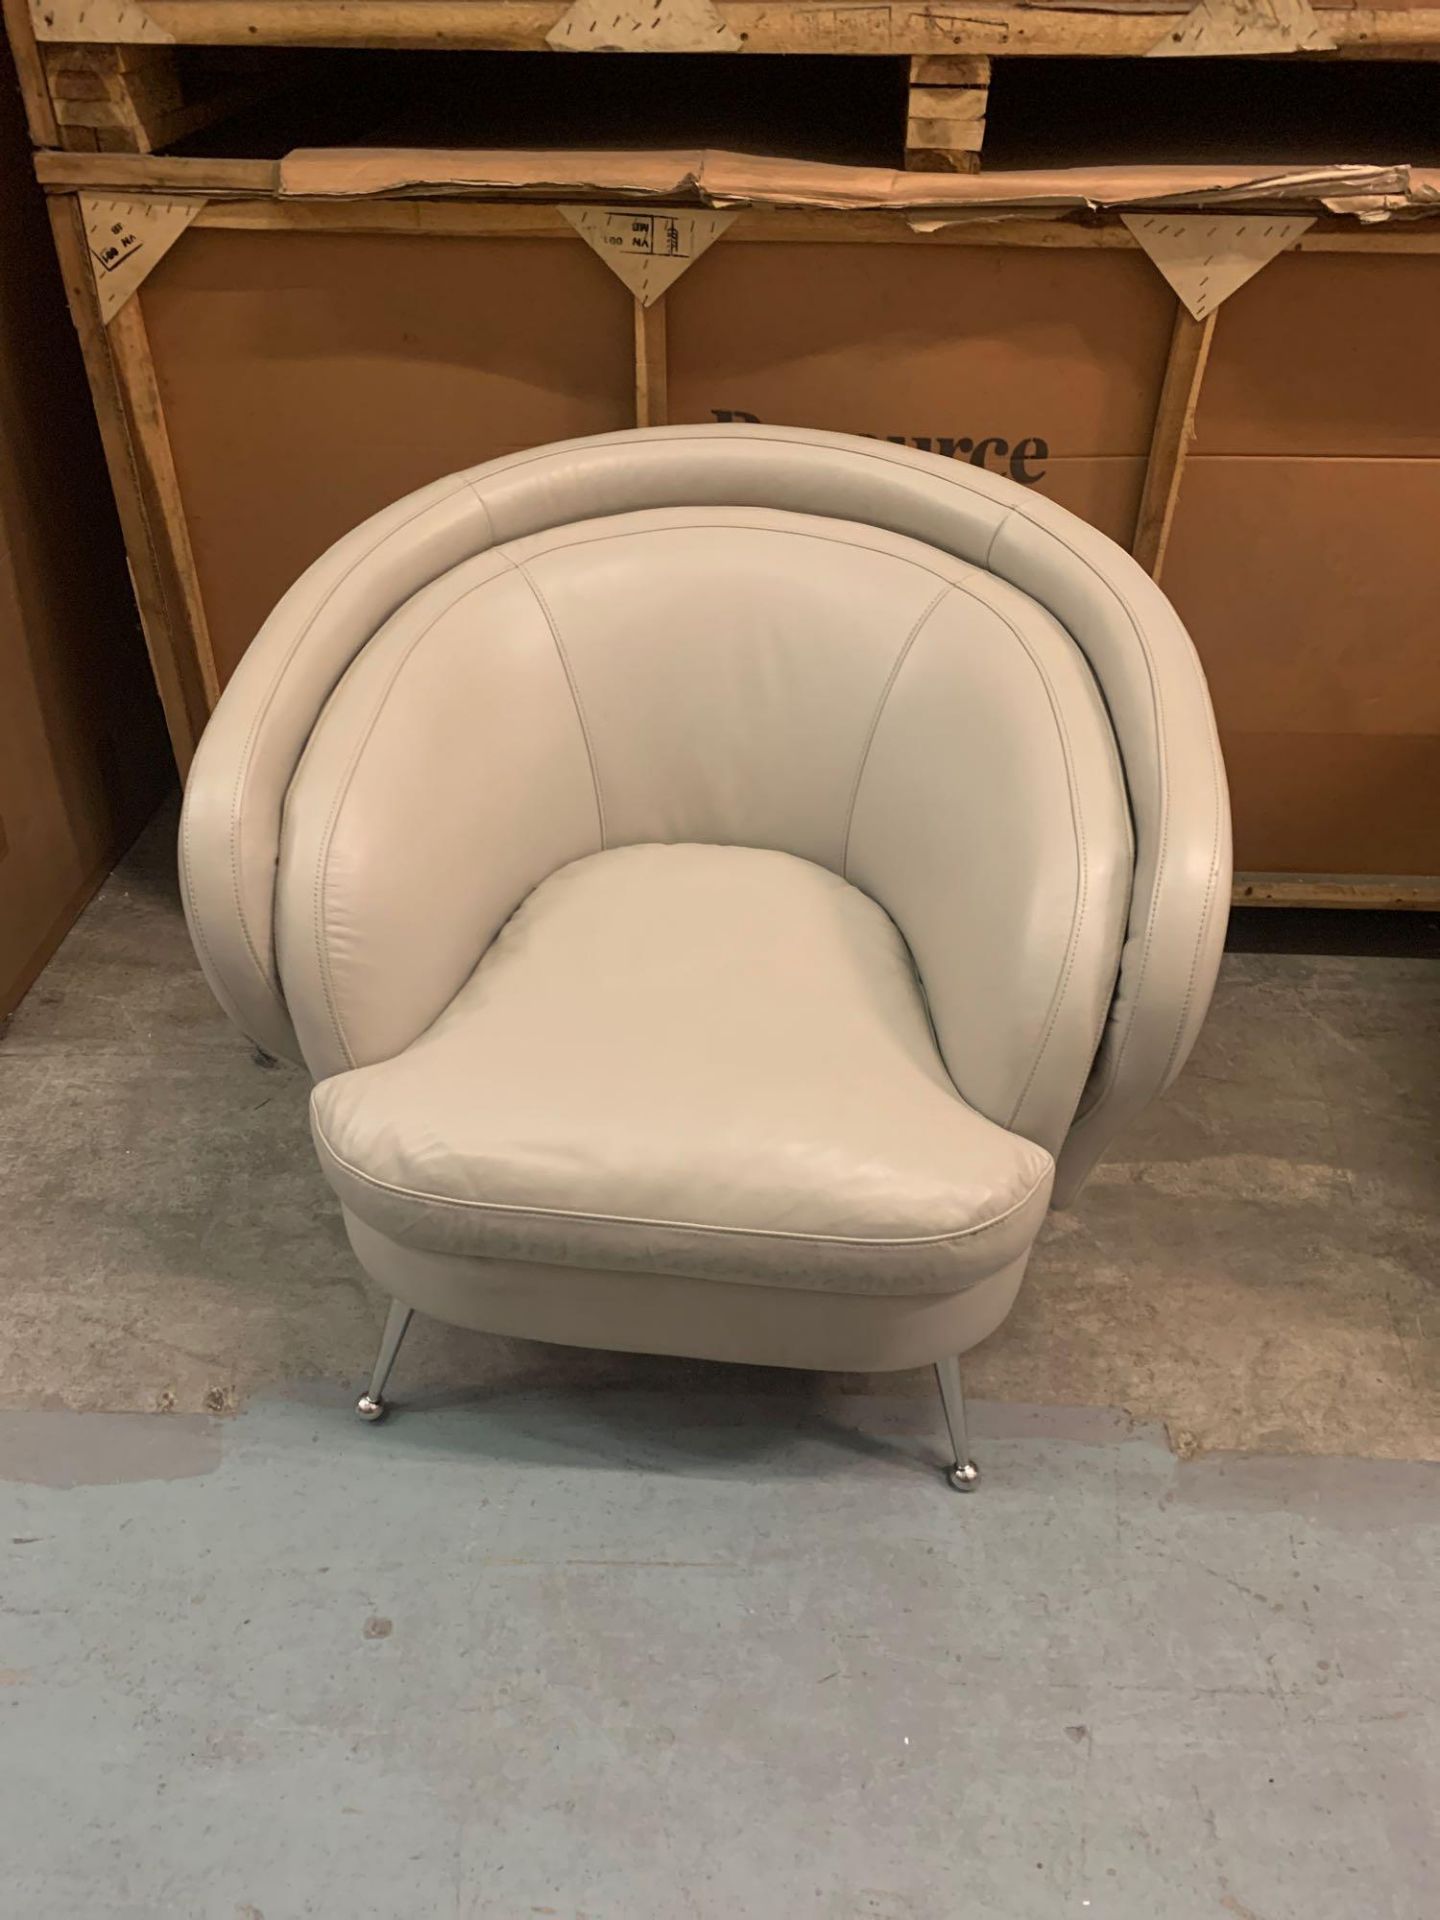 Tesoro Tub Chair Cream Leather W930 x D860 x H790mm - Image 3 of 7